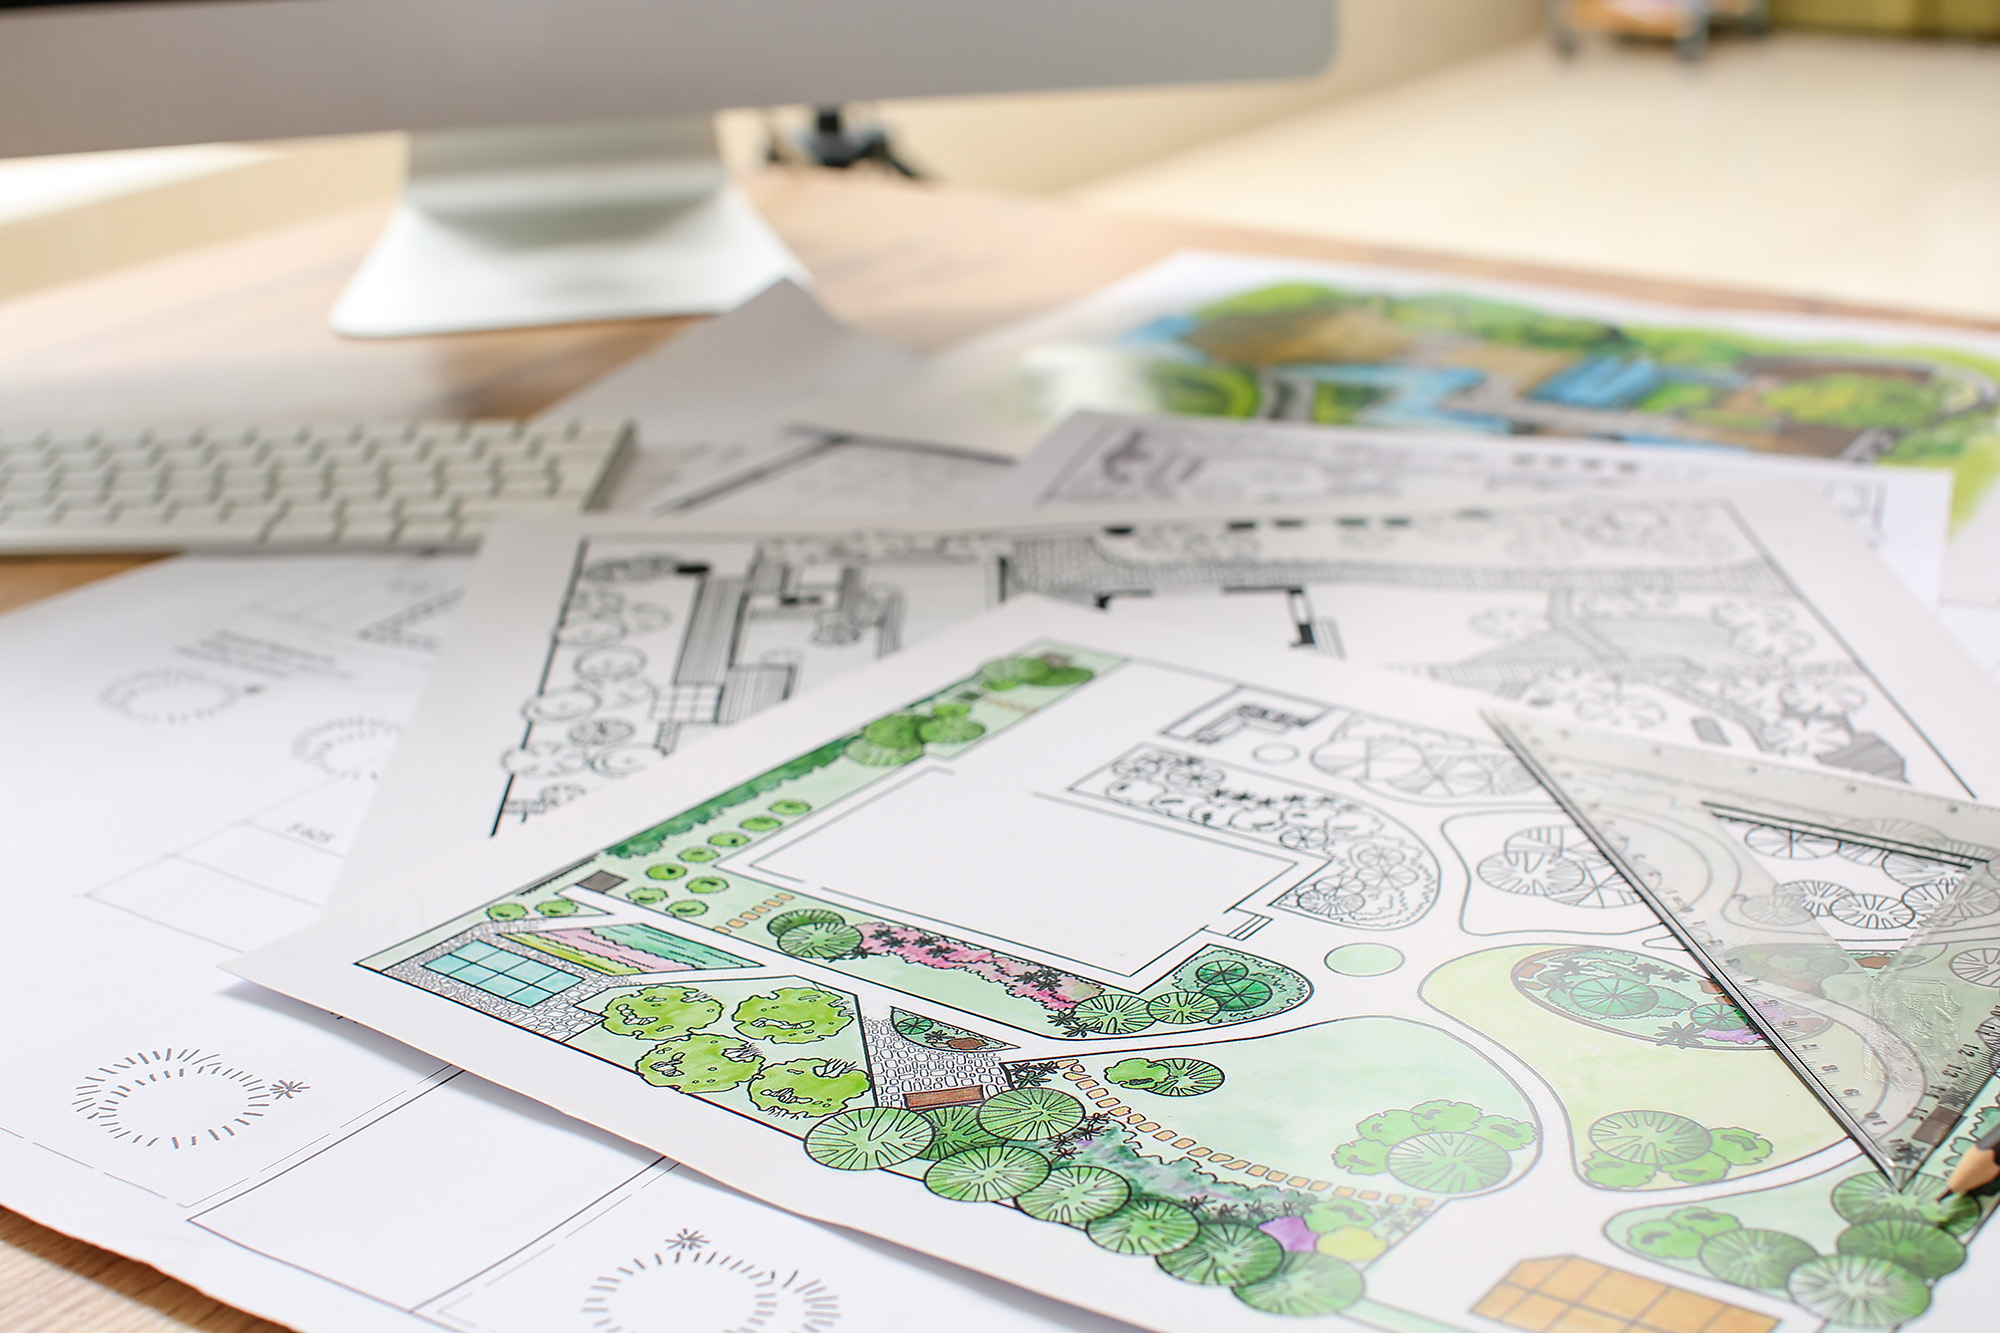 Landscape architect drawings on office desk